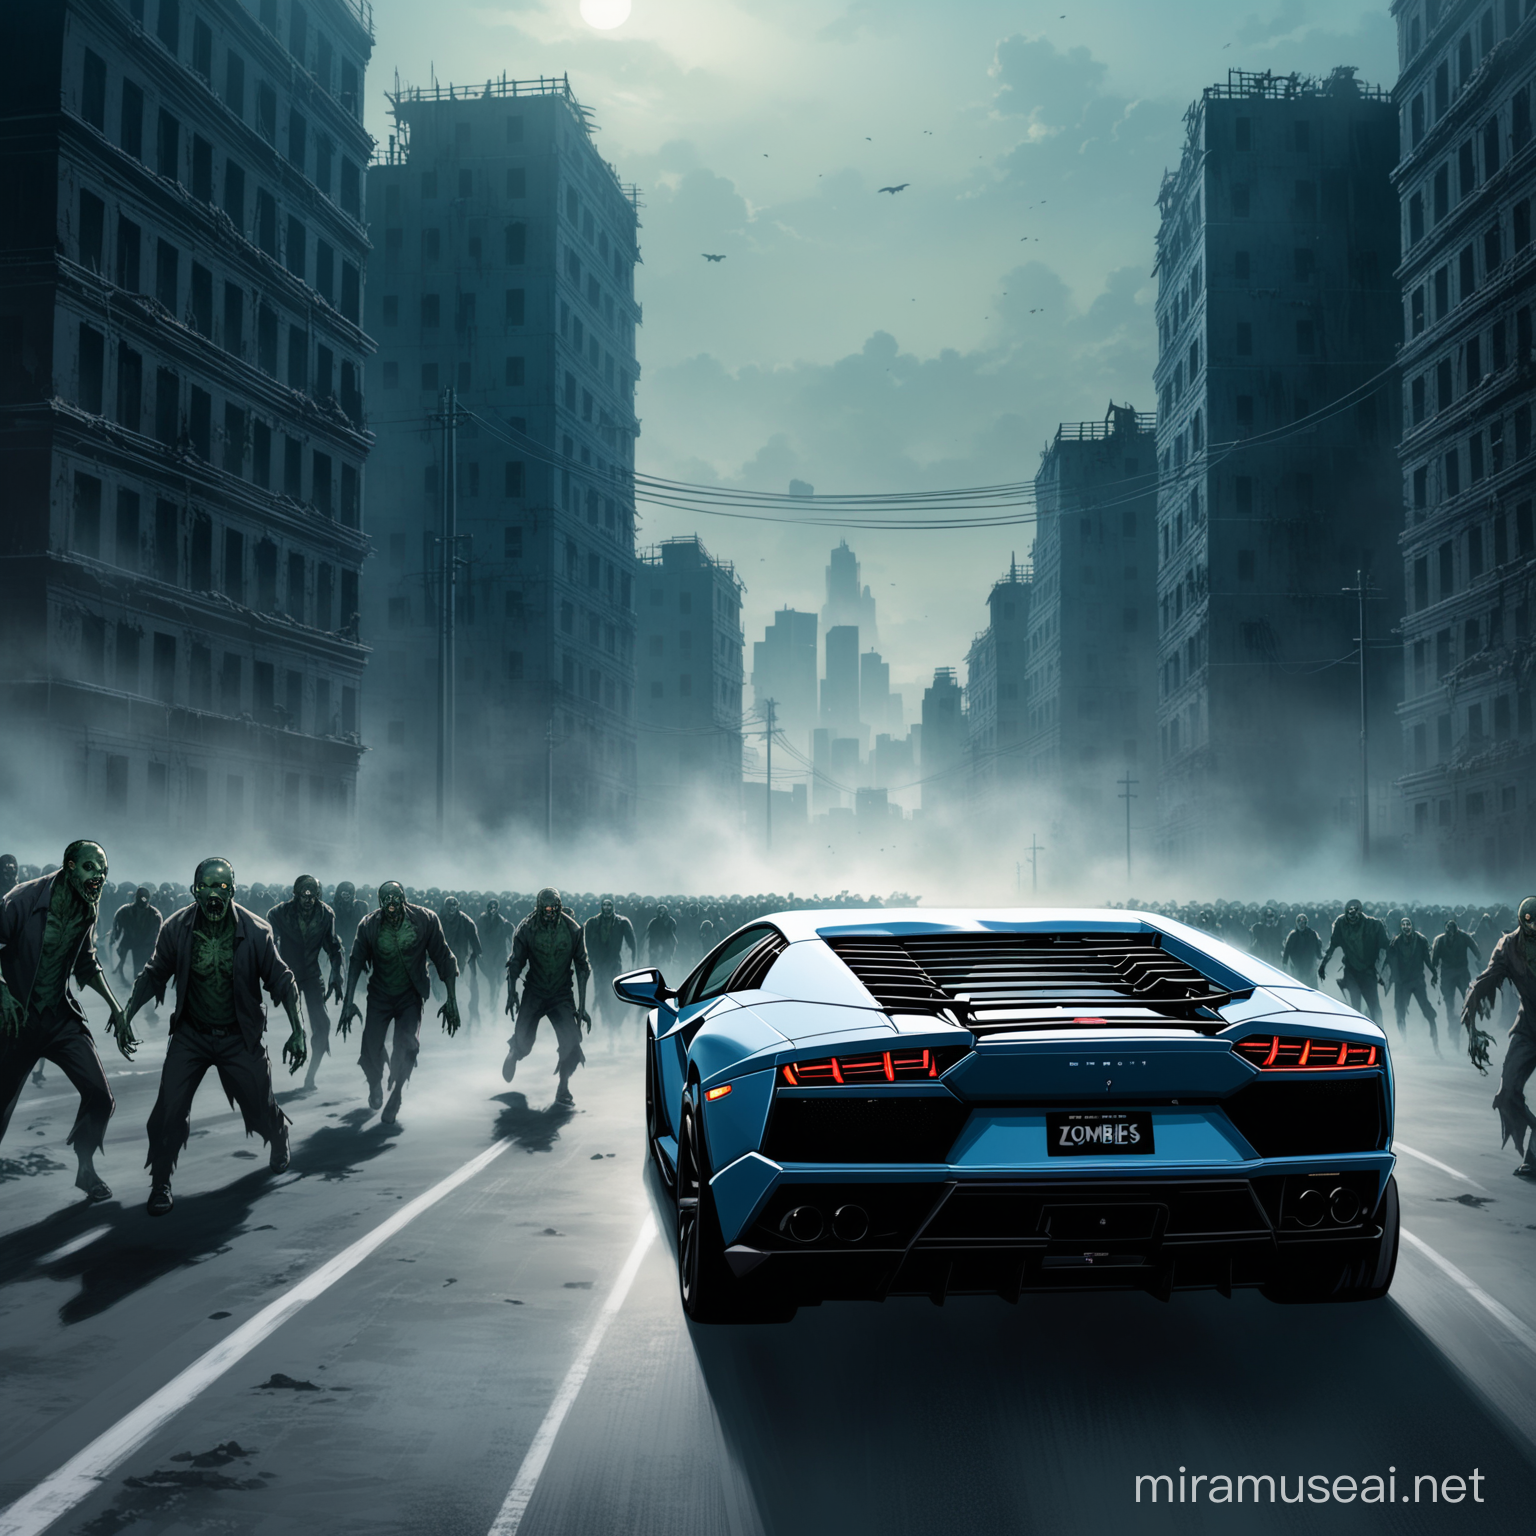 Speeding Dark Blue Lamborghini Evades Zombie Horde in Urban Landscape